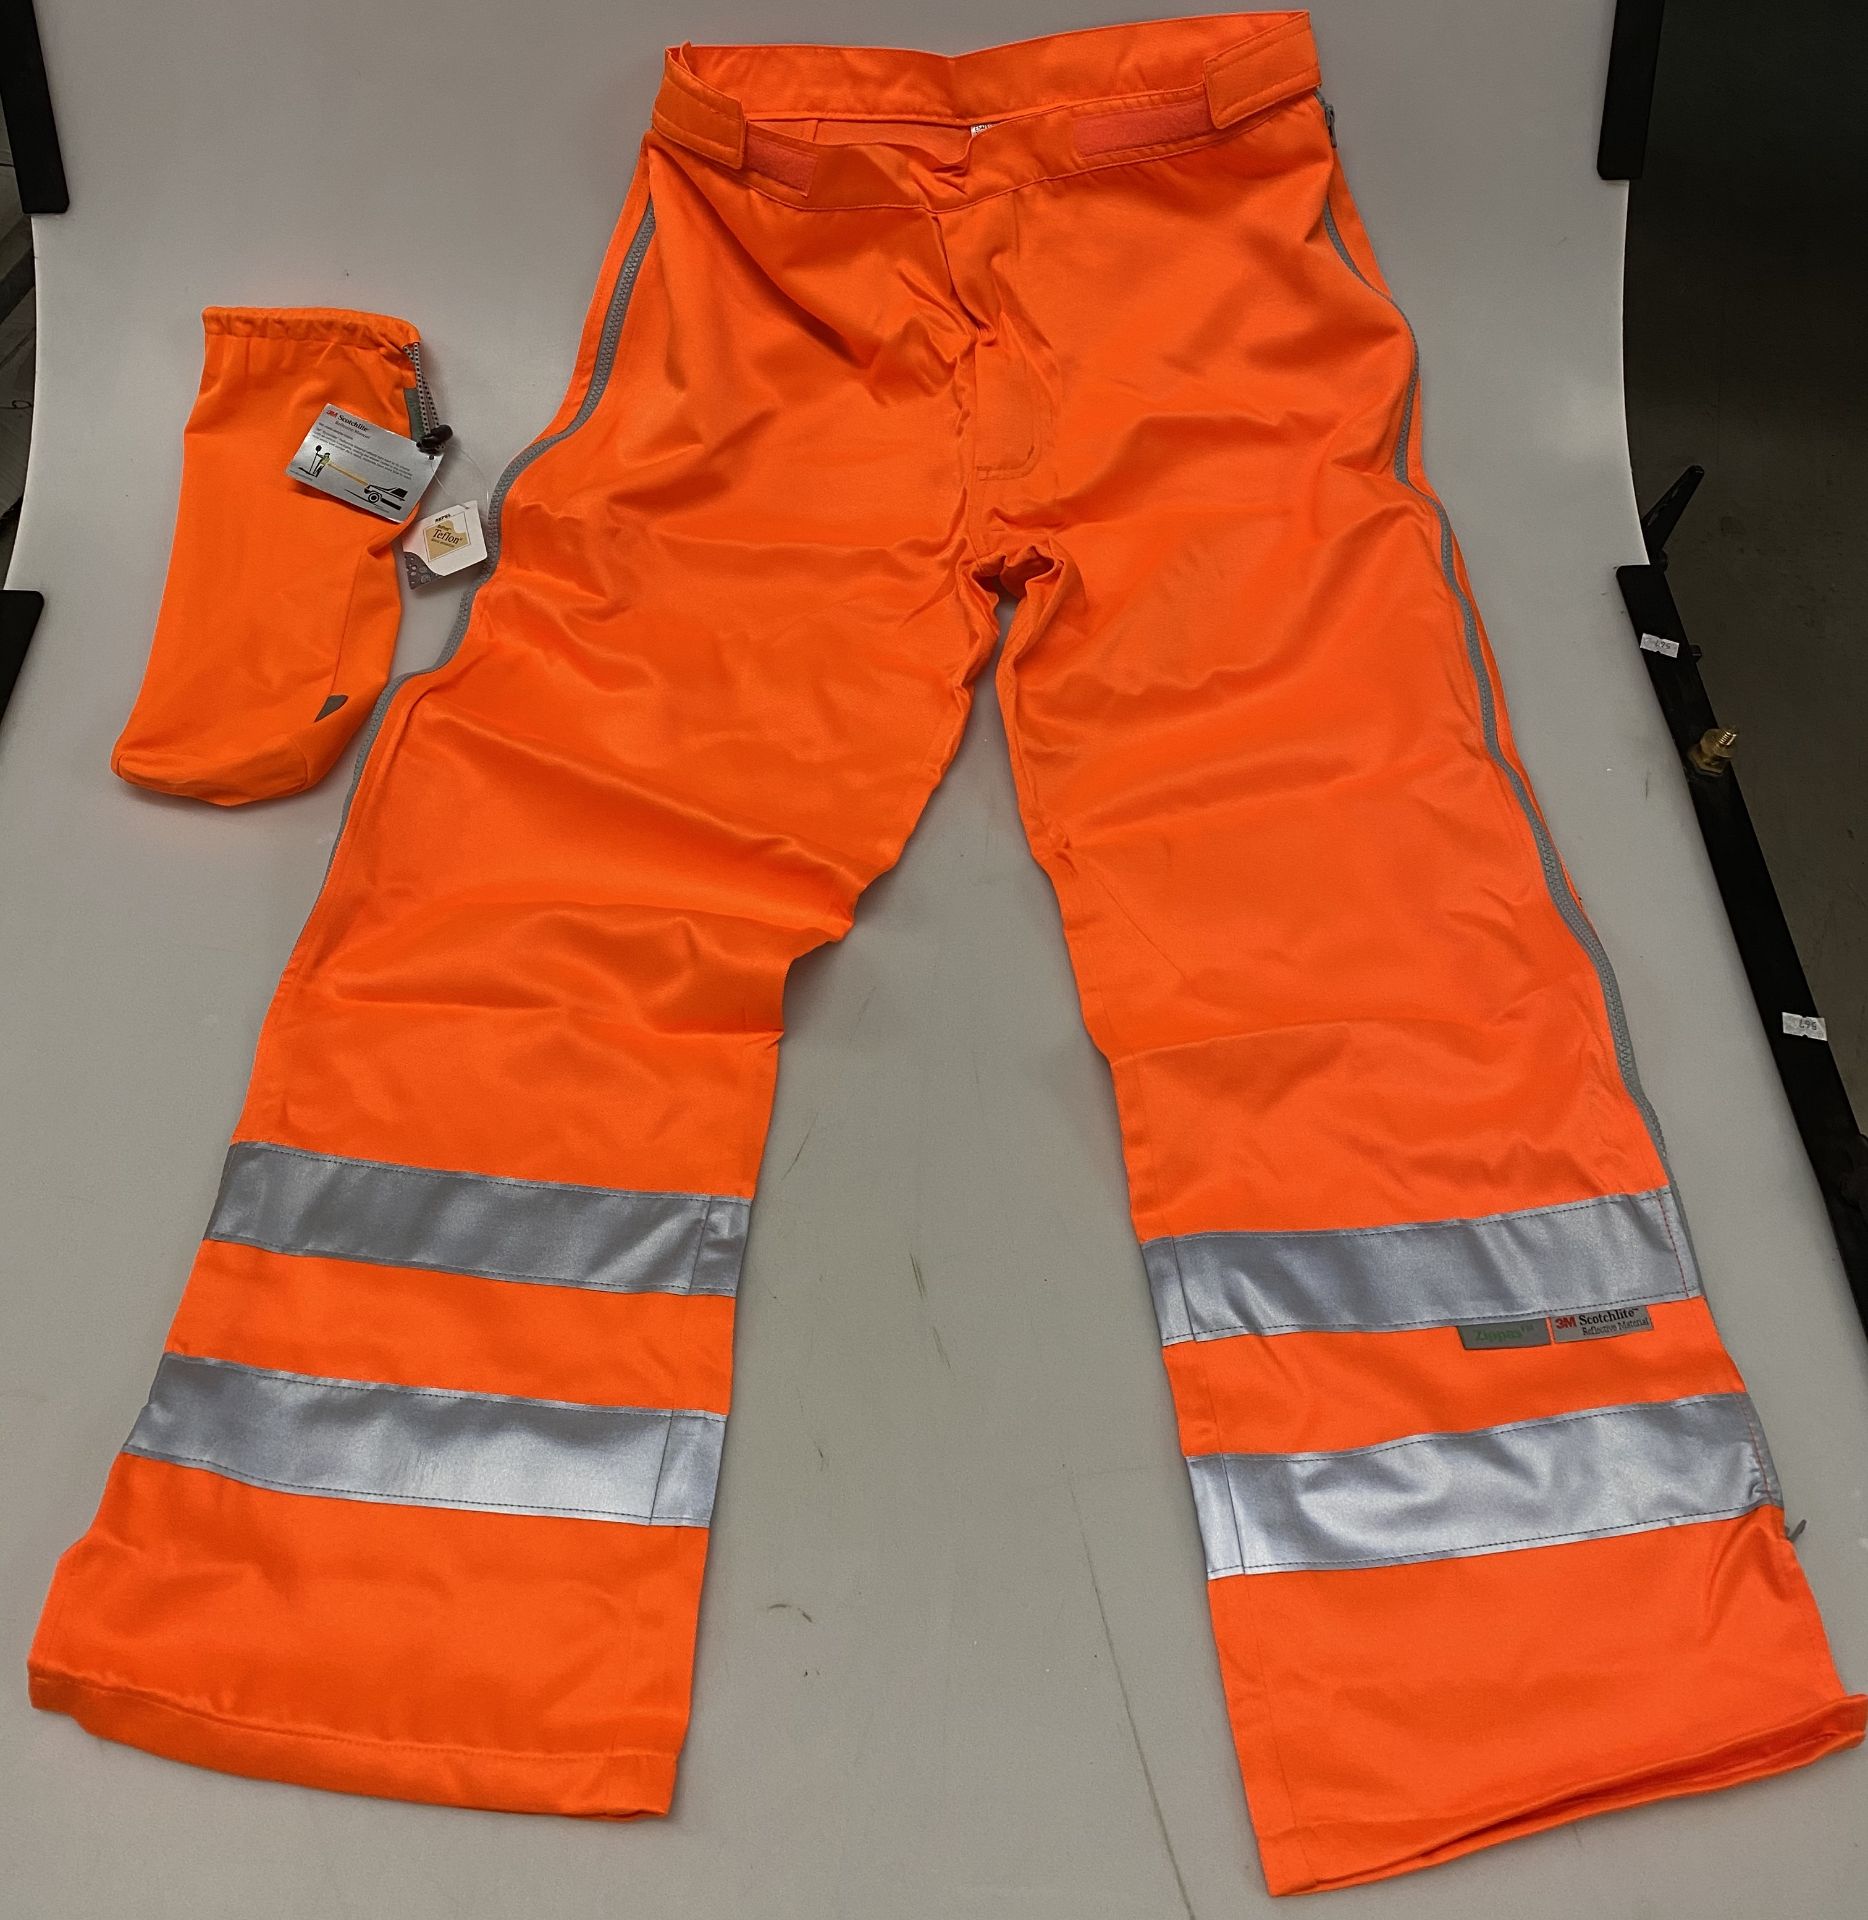 16 x Hi-Vi Zippas MX orange PPE high visibility Teflon/Scotchlite zipped over trousers and bags.